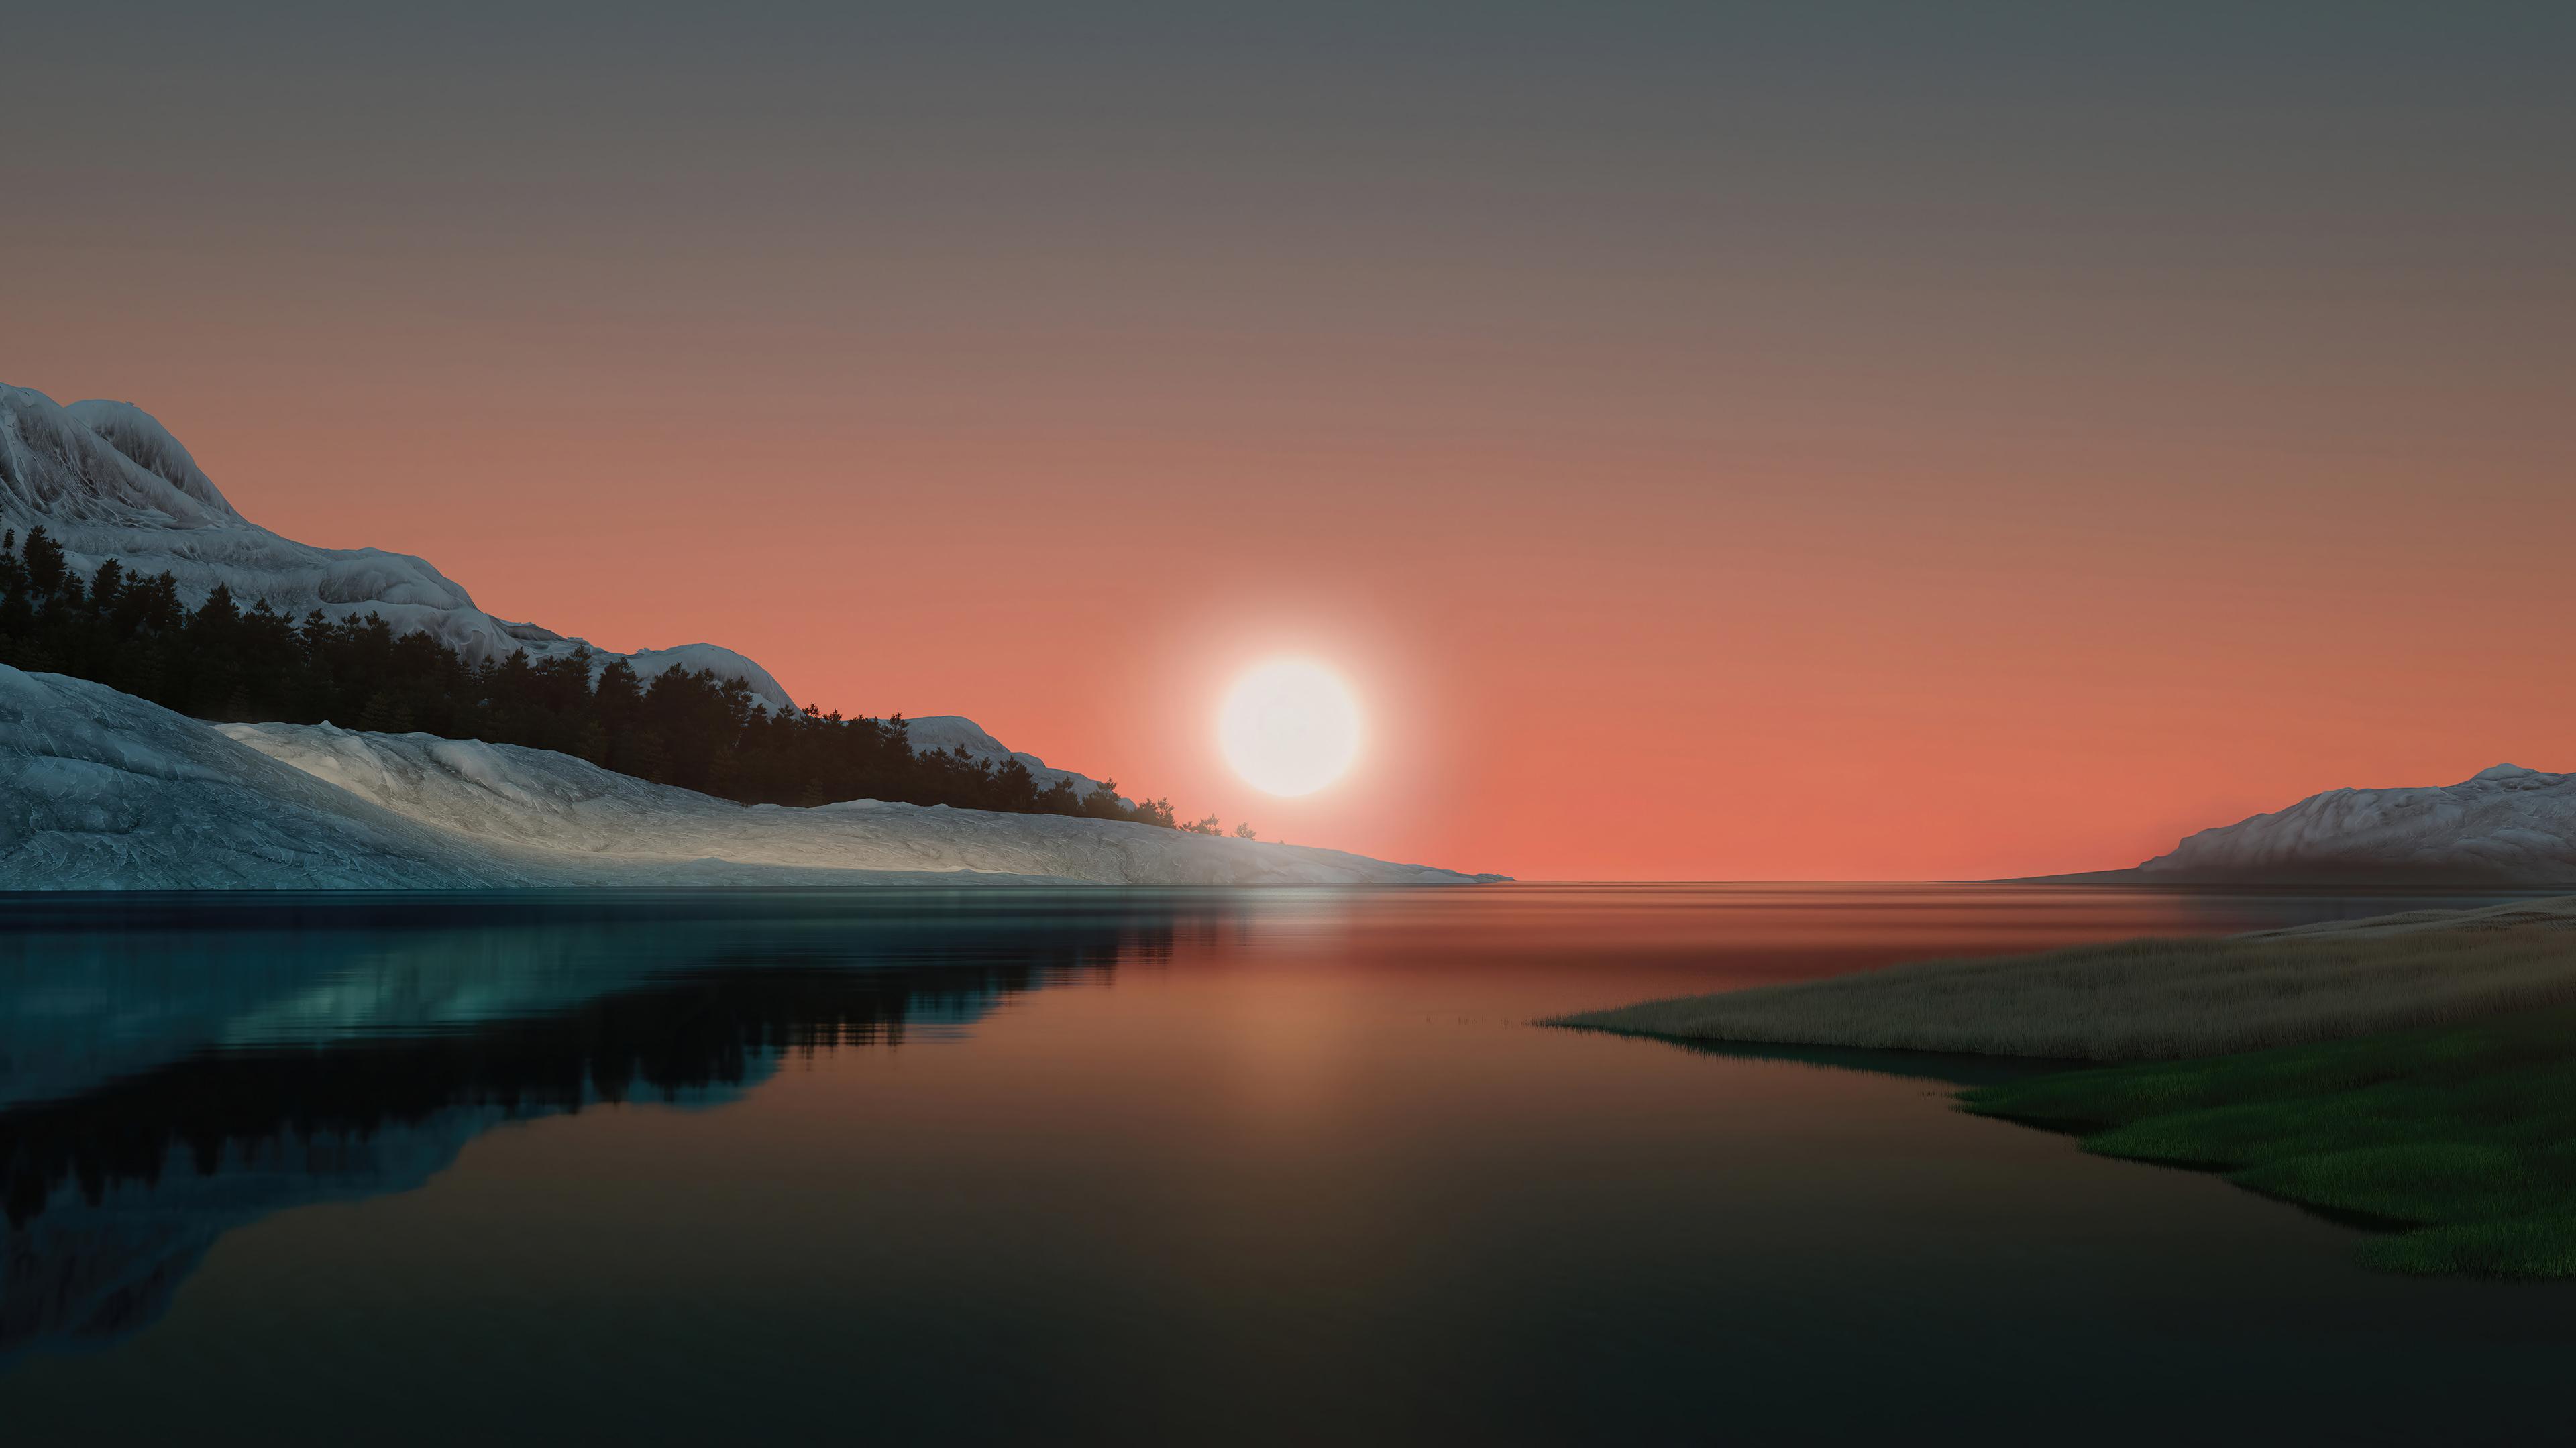 Windows Sunset Scenery Background Wallpaper 4k Pc Desktop 540b